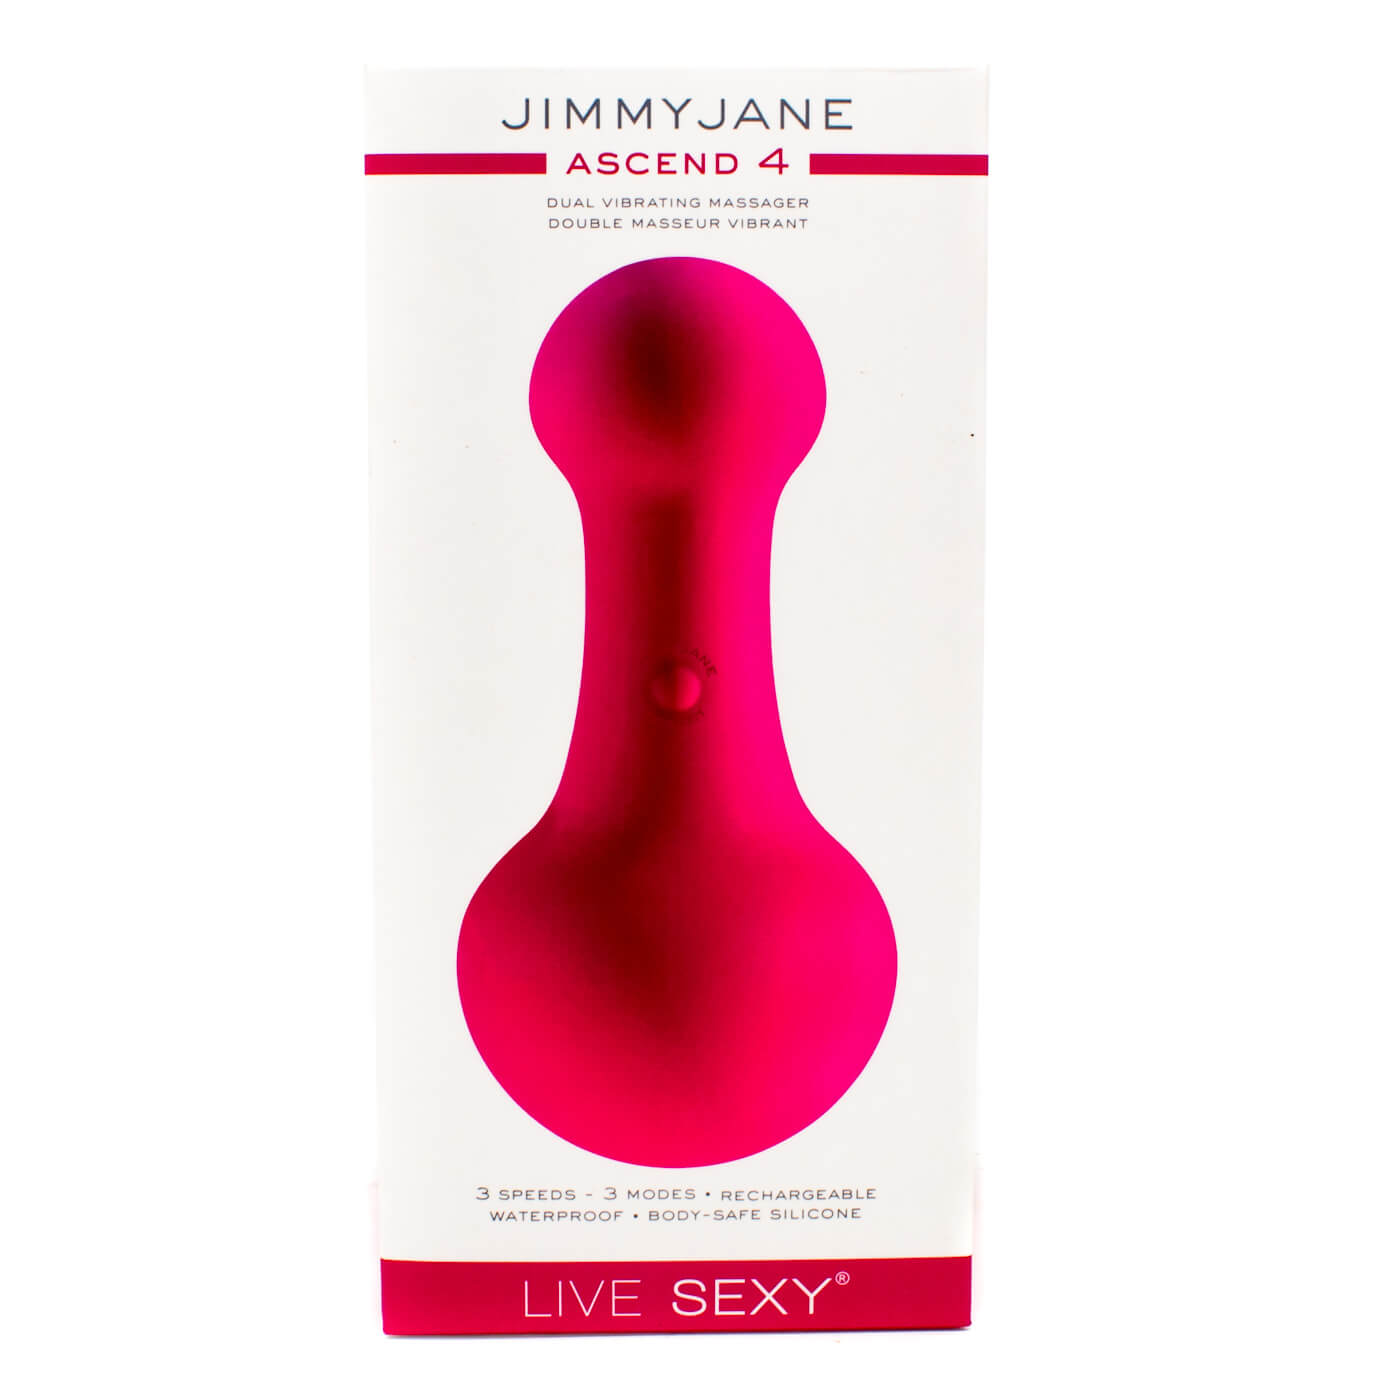 Jimmyjane Ascend 4 Multi-Function USB Rechargeable Vibrating Massager